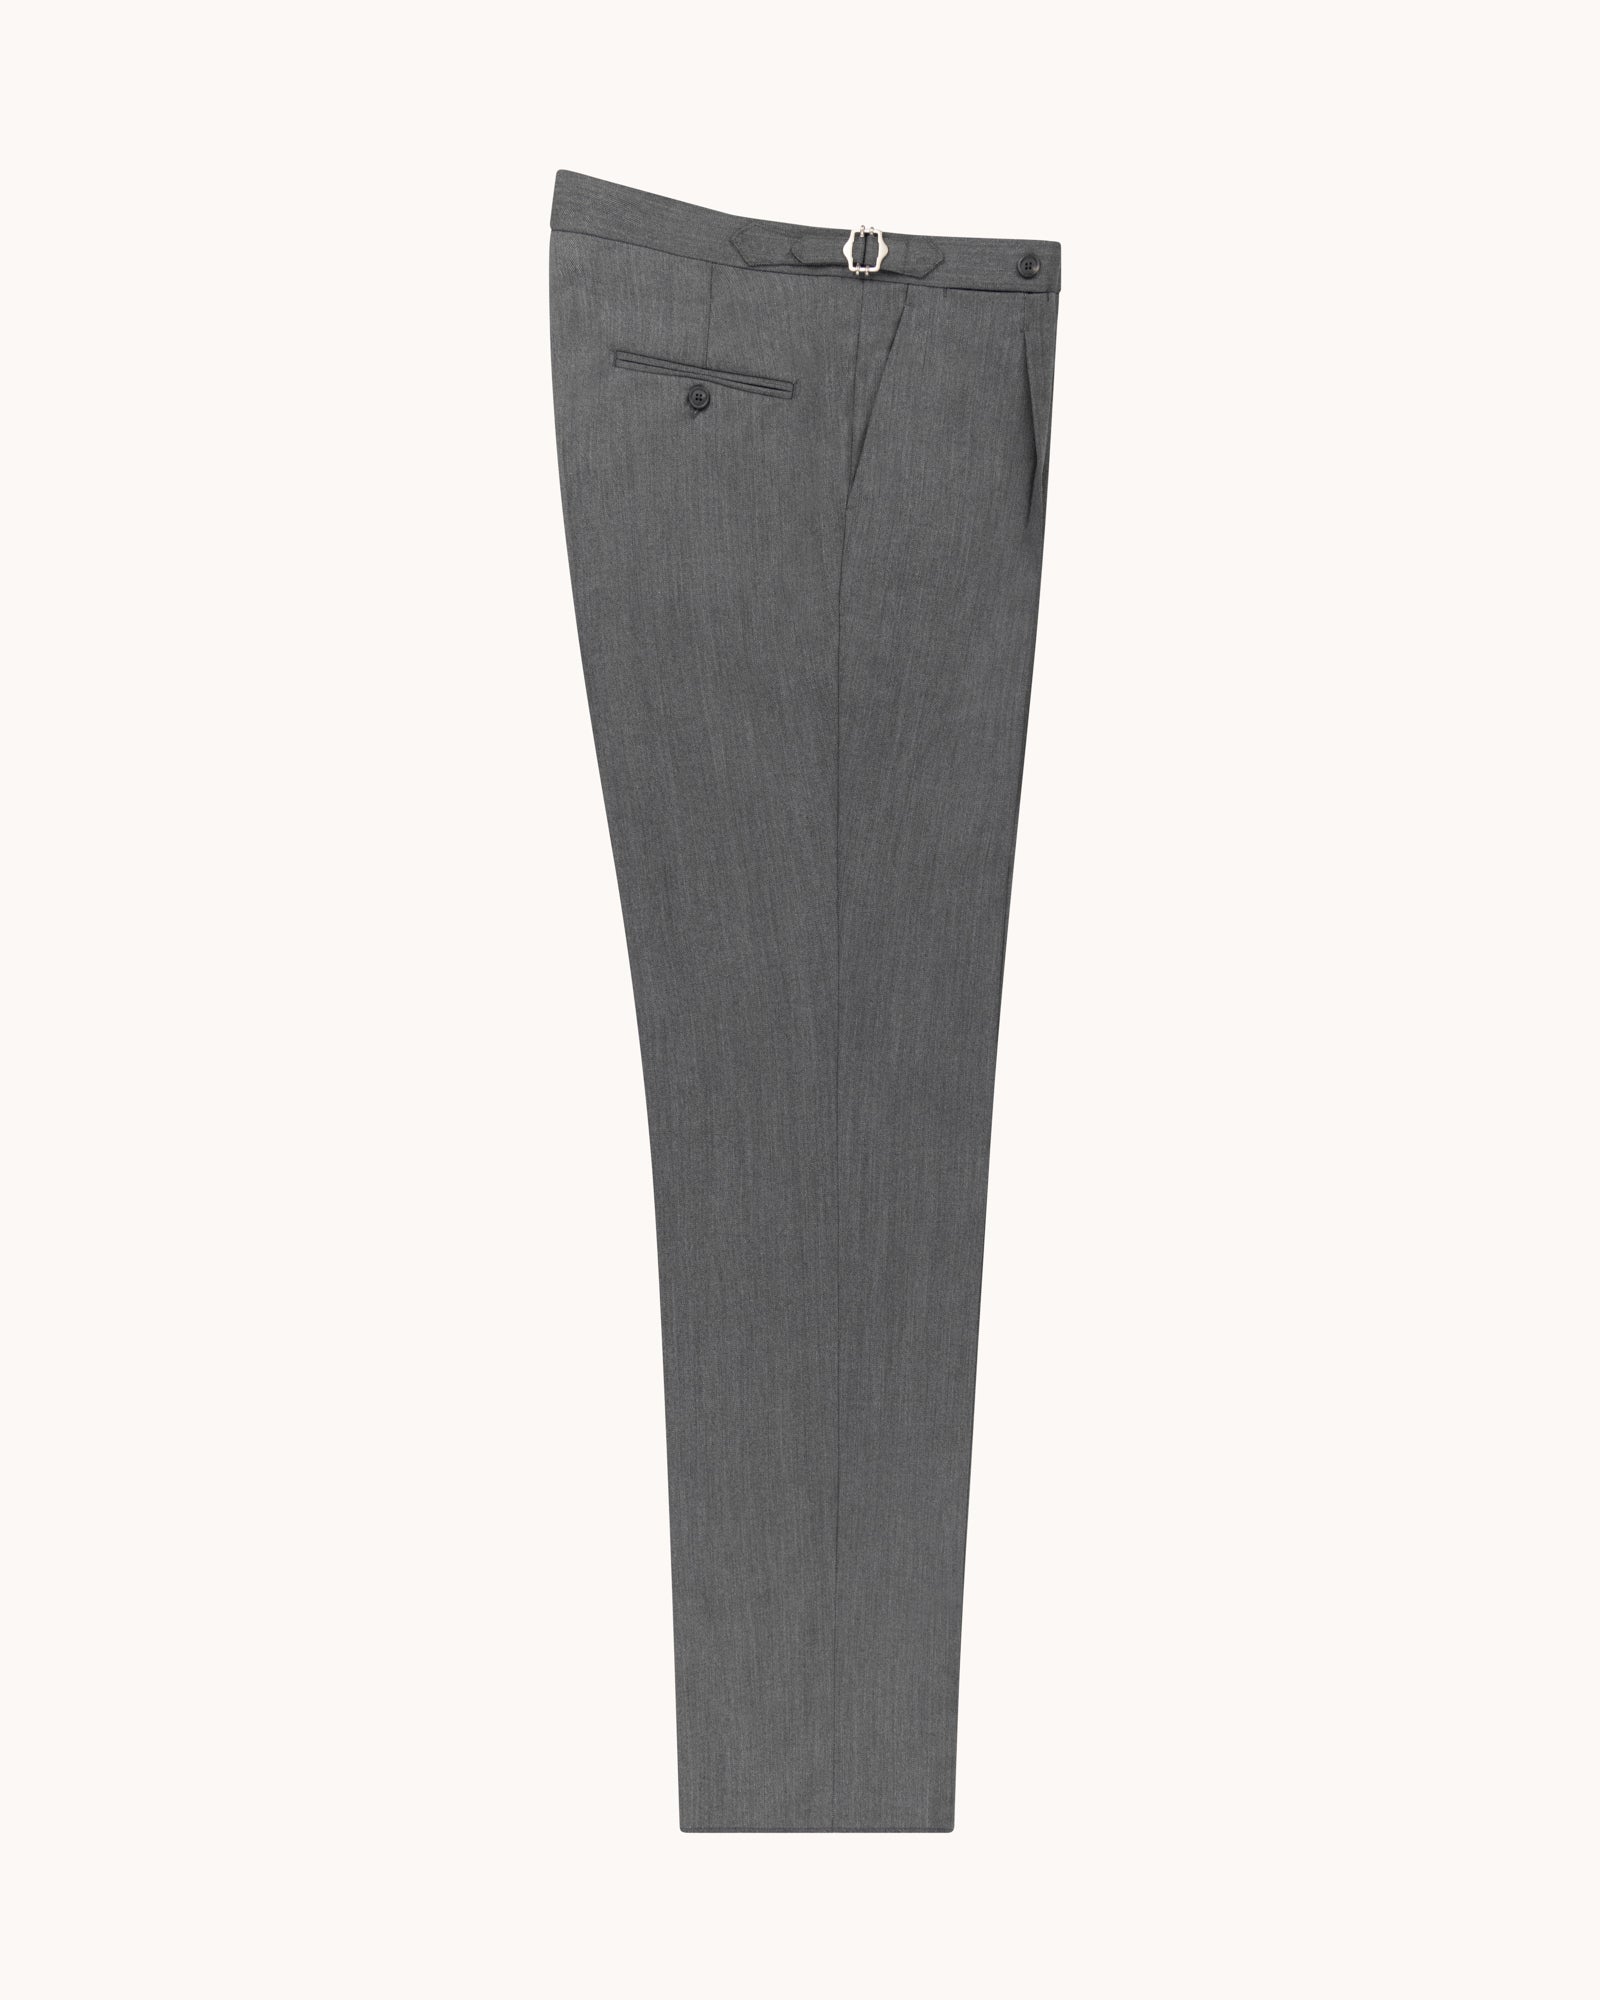 Single Pleat Trouser - Mid Grey Herringbone Wool